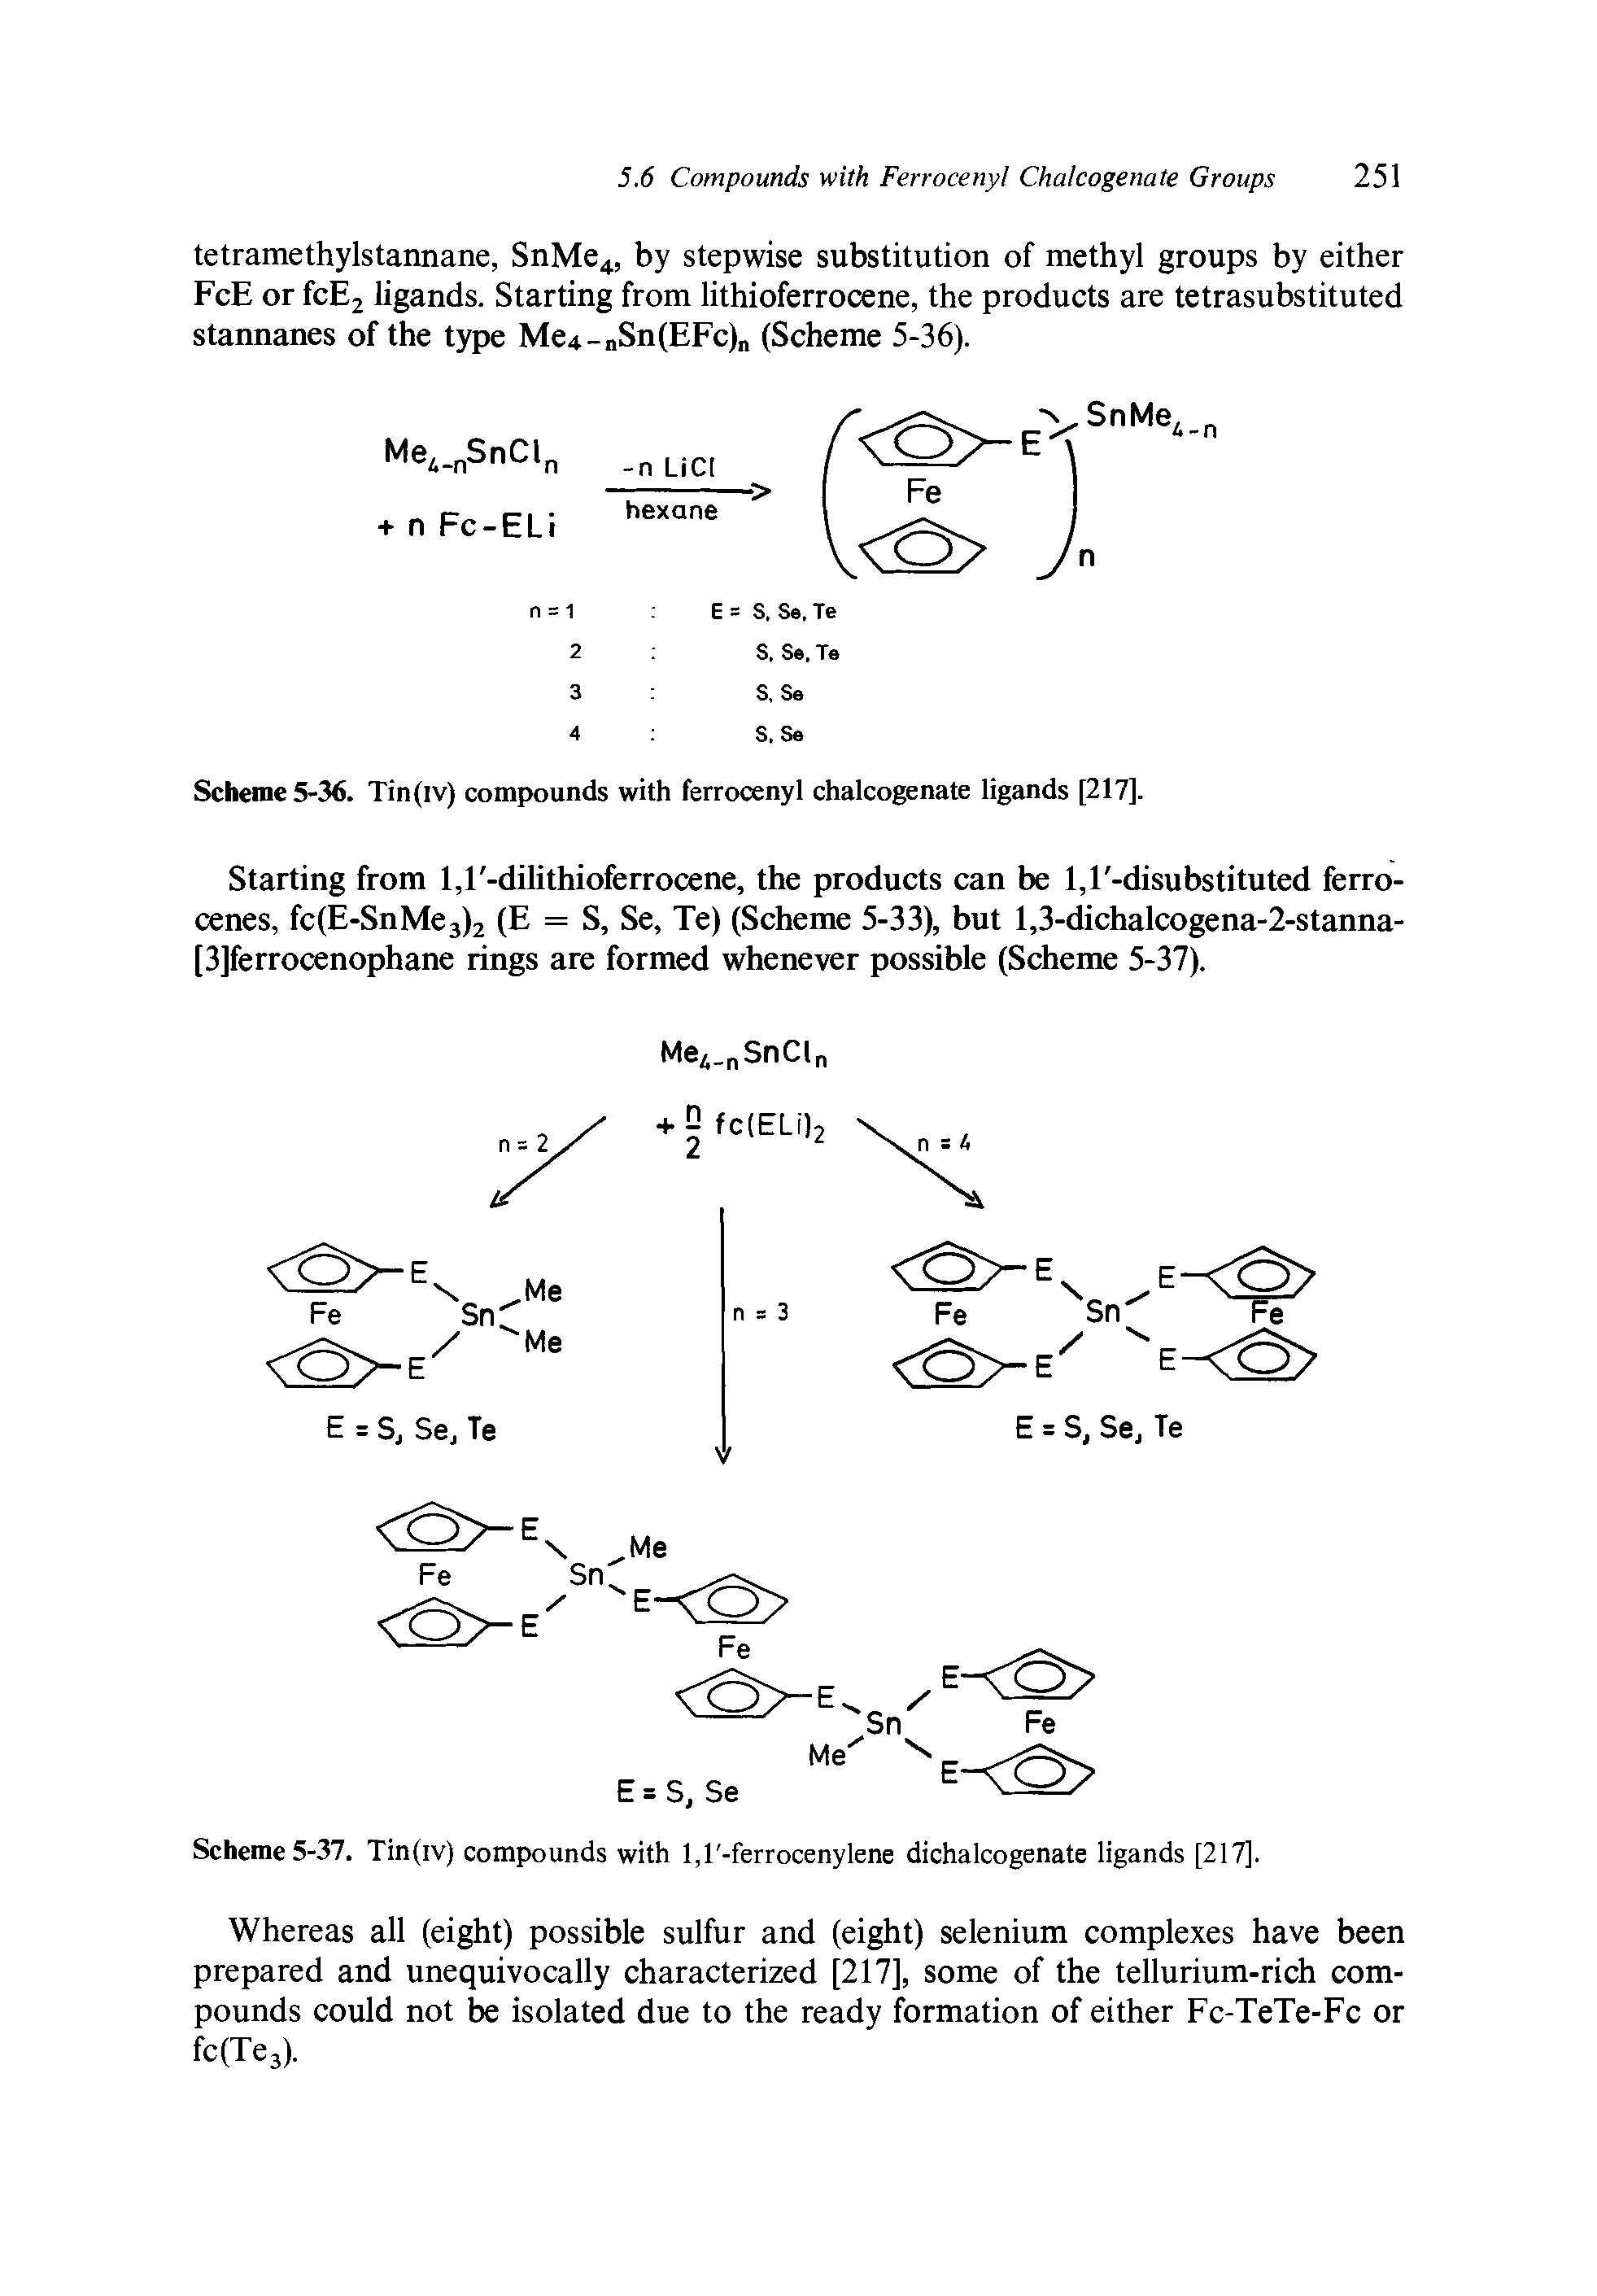 Scheme 5-36. Tin(iv) compounds with ferrocenyl chalcogenate ligands [217].